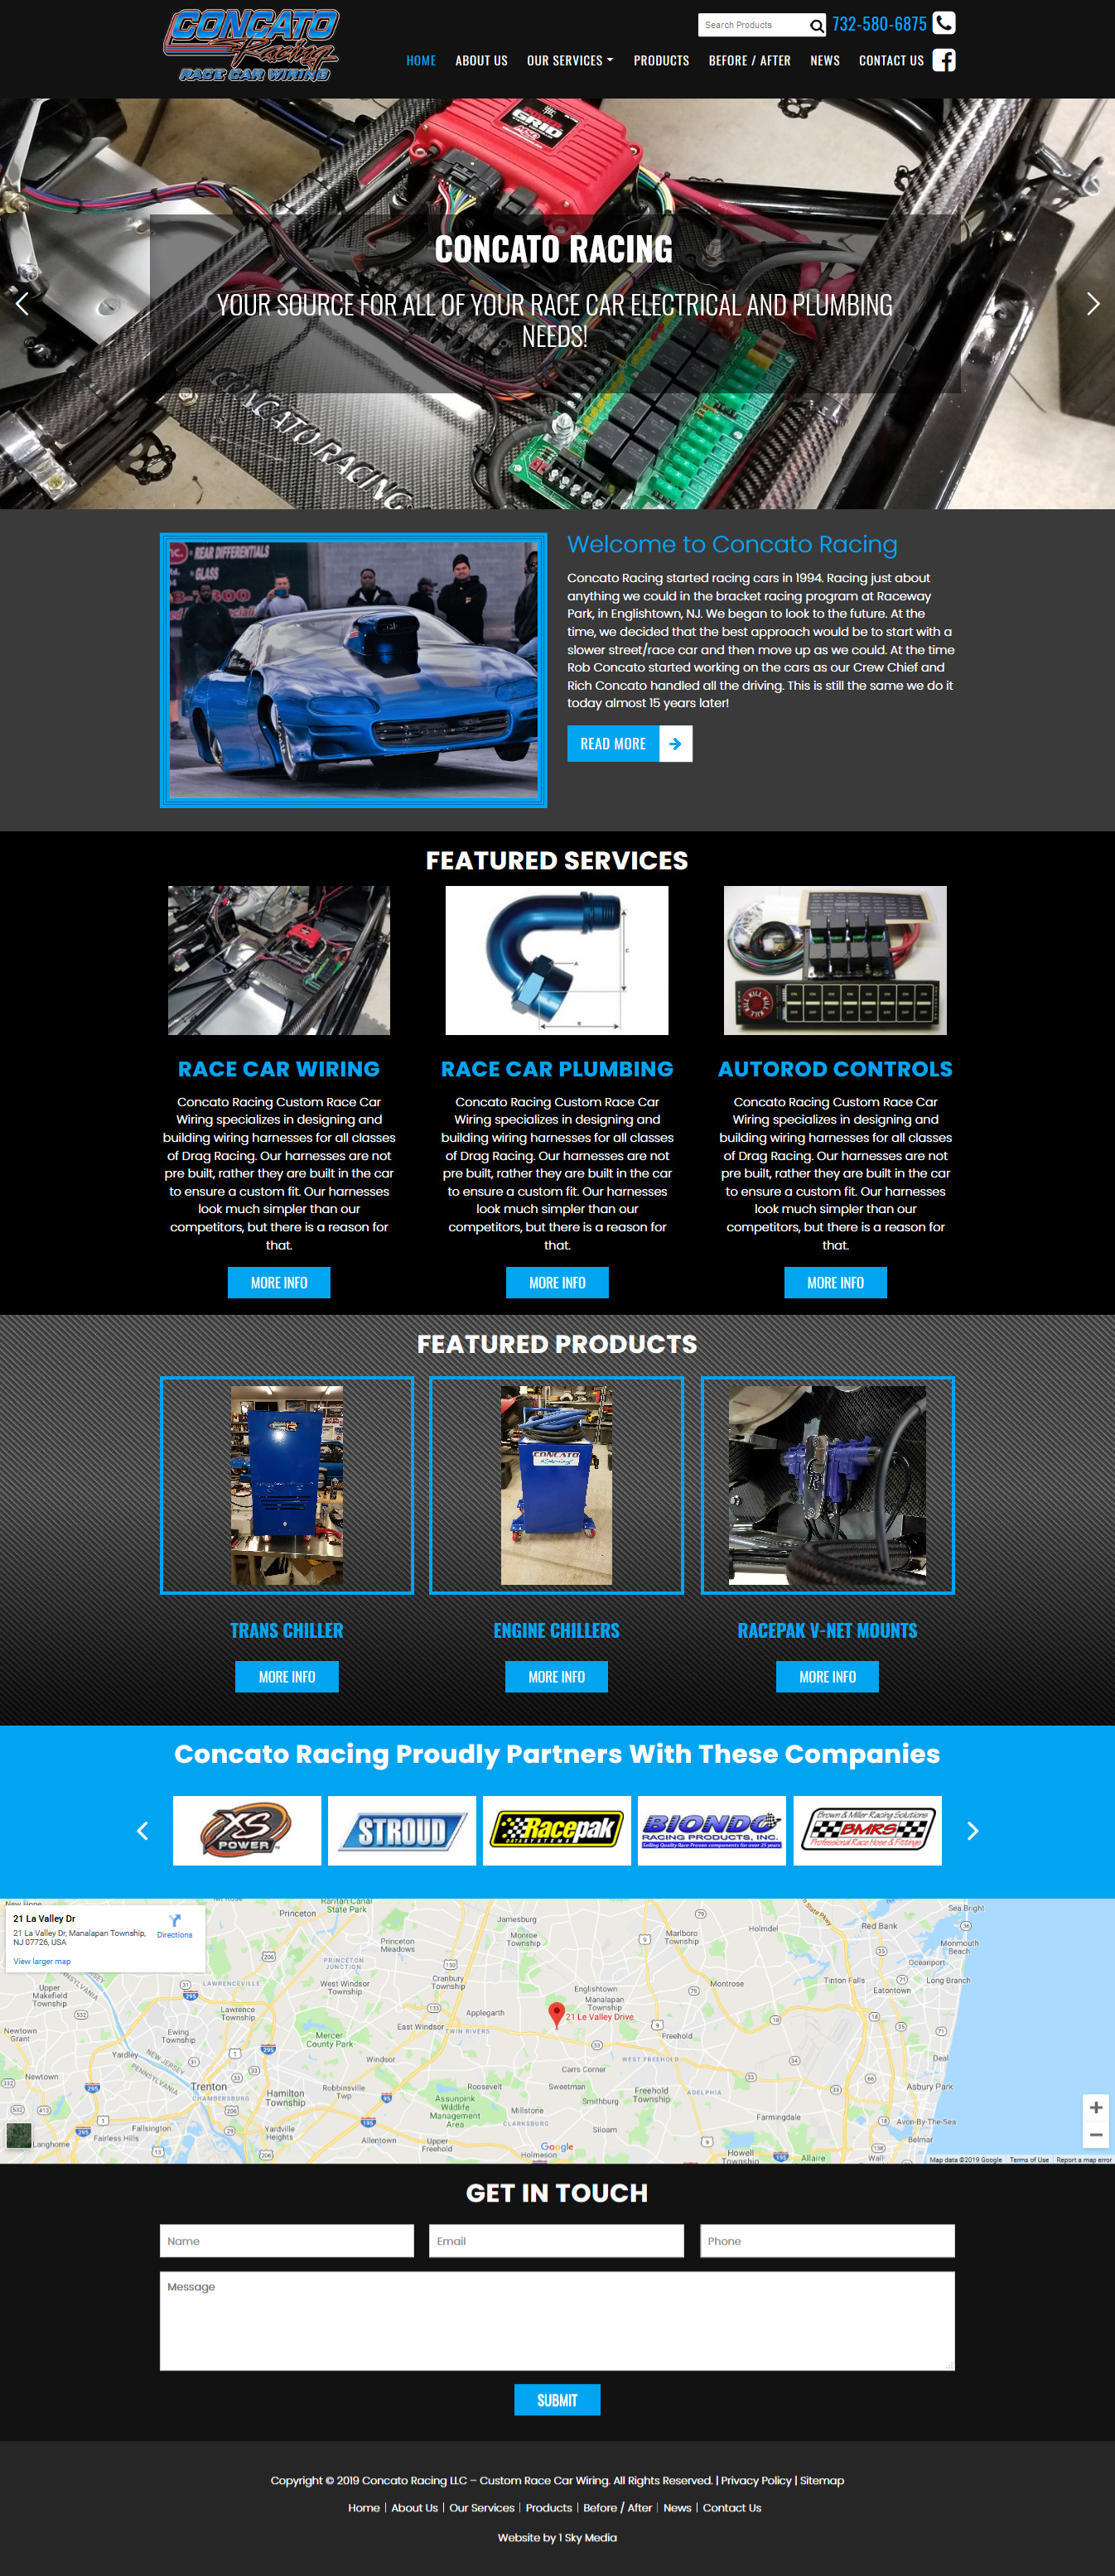 Concato Racing race care wiring and plumbing website design 